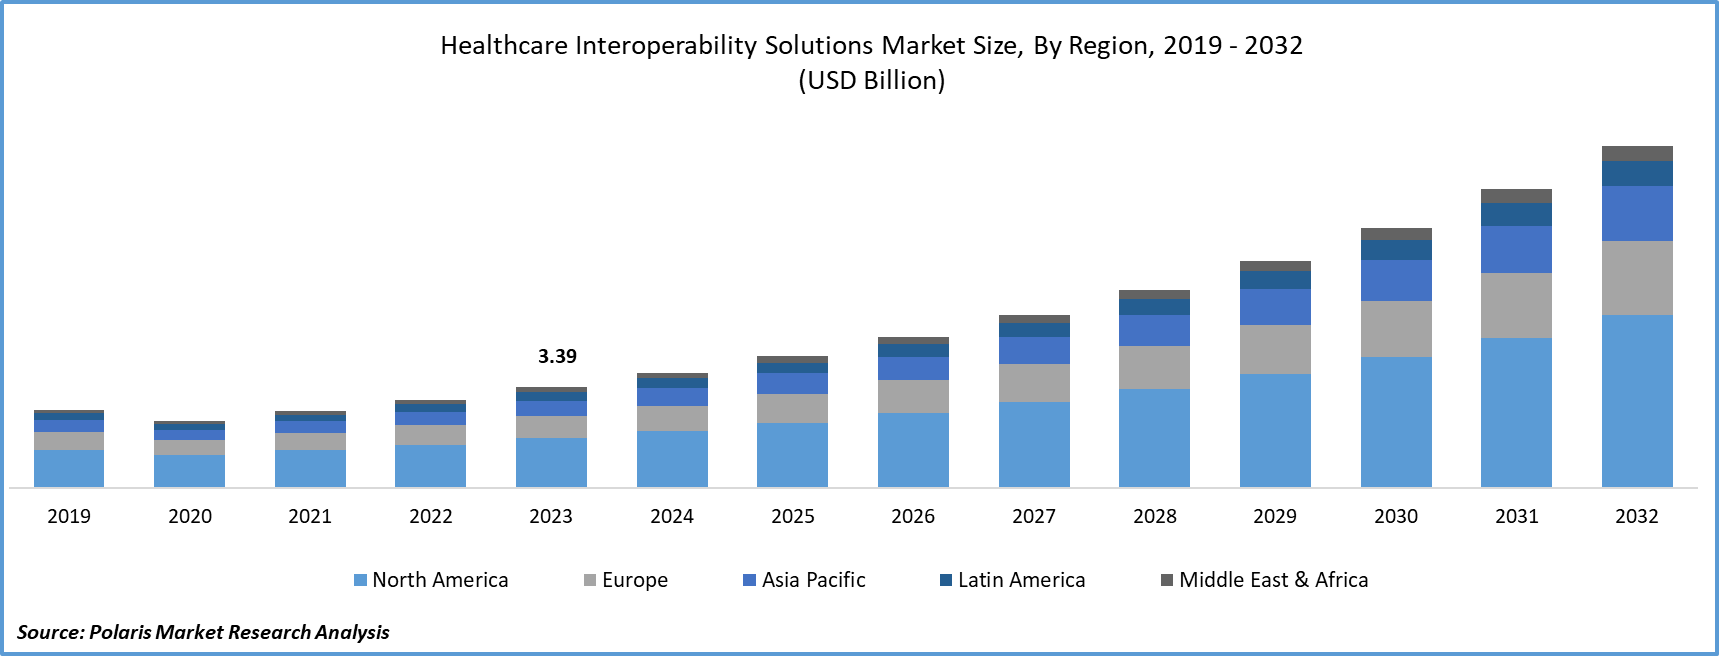 Healthcare Interoperability Solutions Market Size